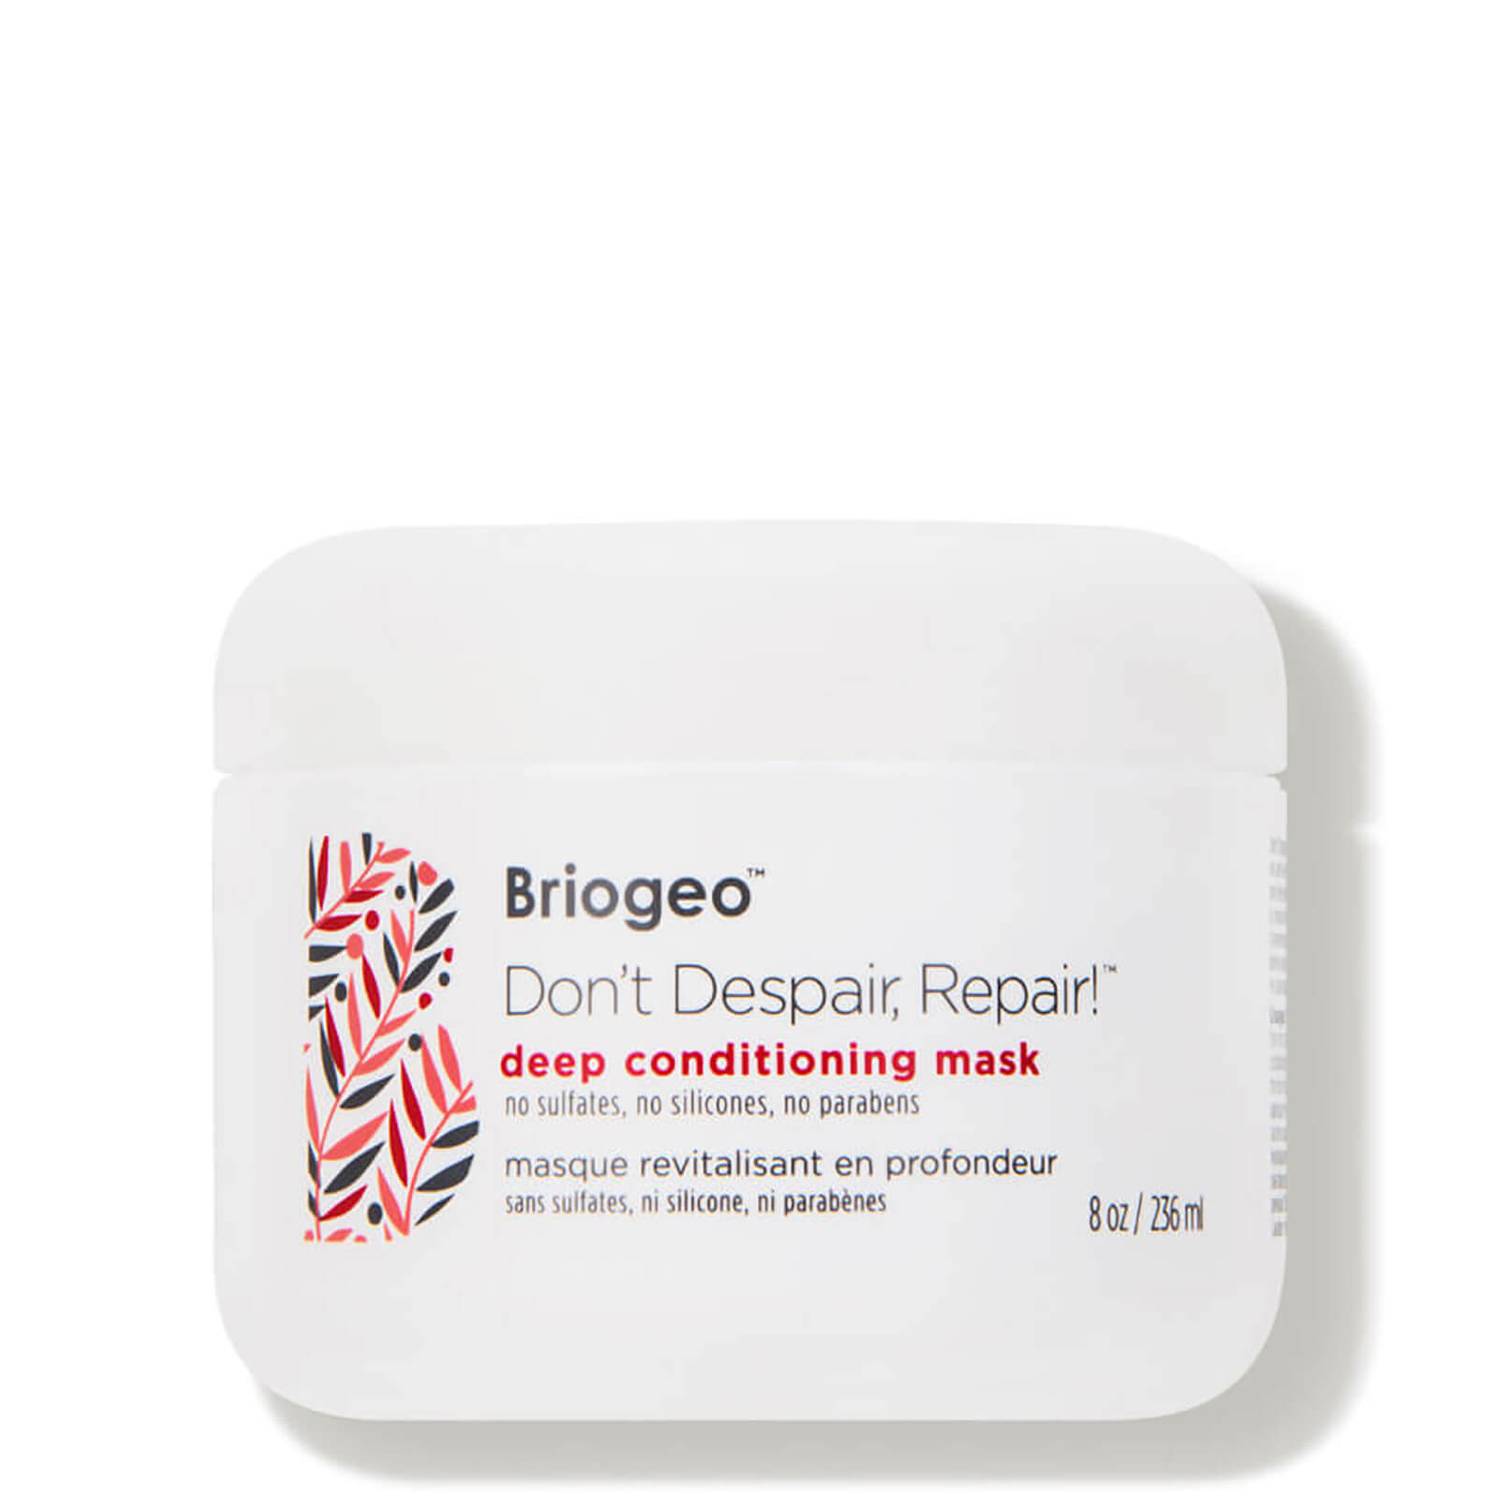 Briogeo + Despair, Repair! Deep Conditioning Hair Mask